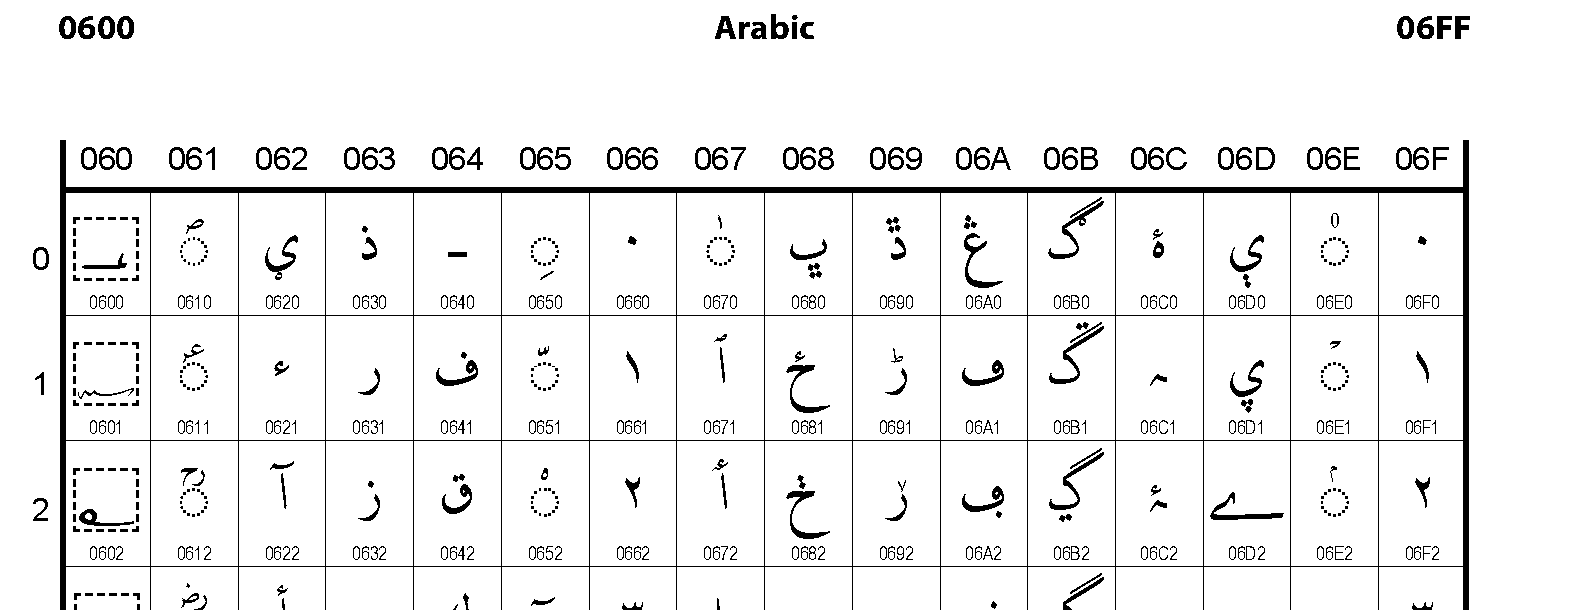 Unicode - Arabic